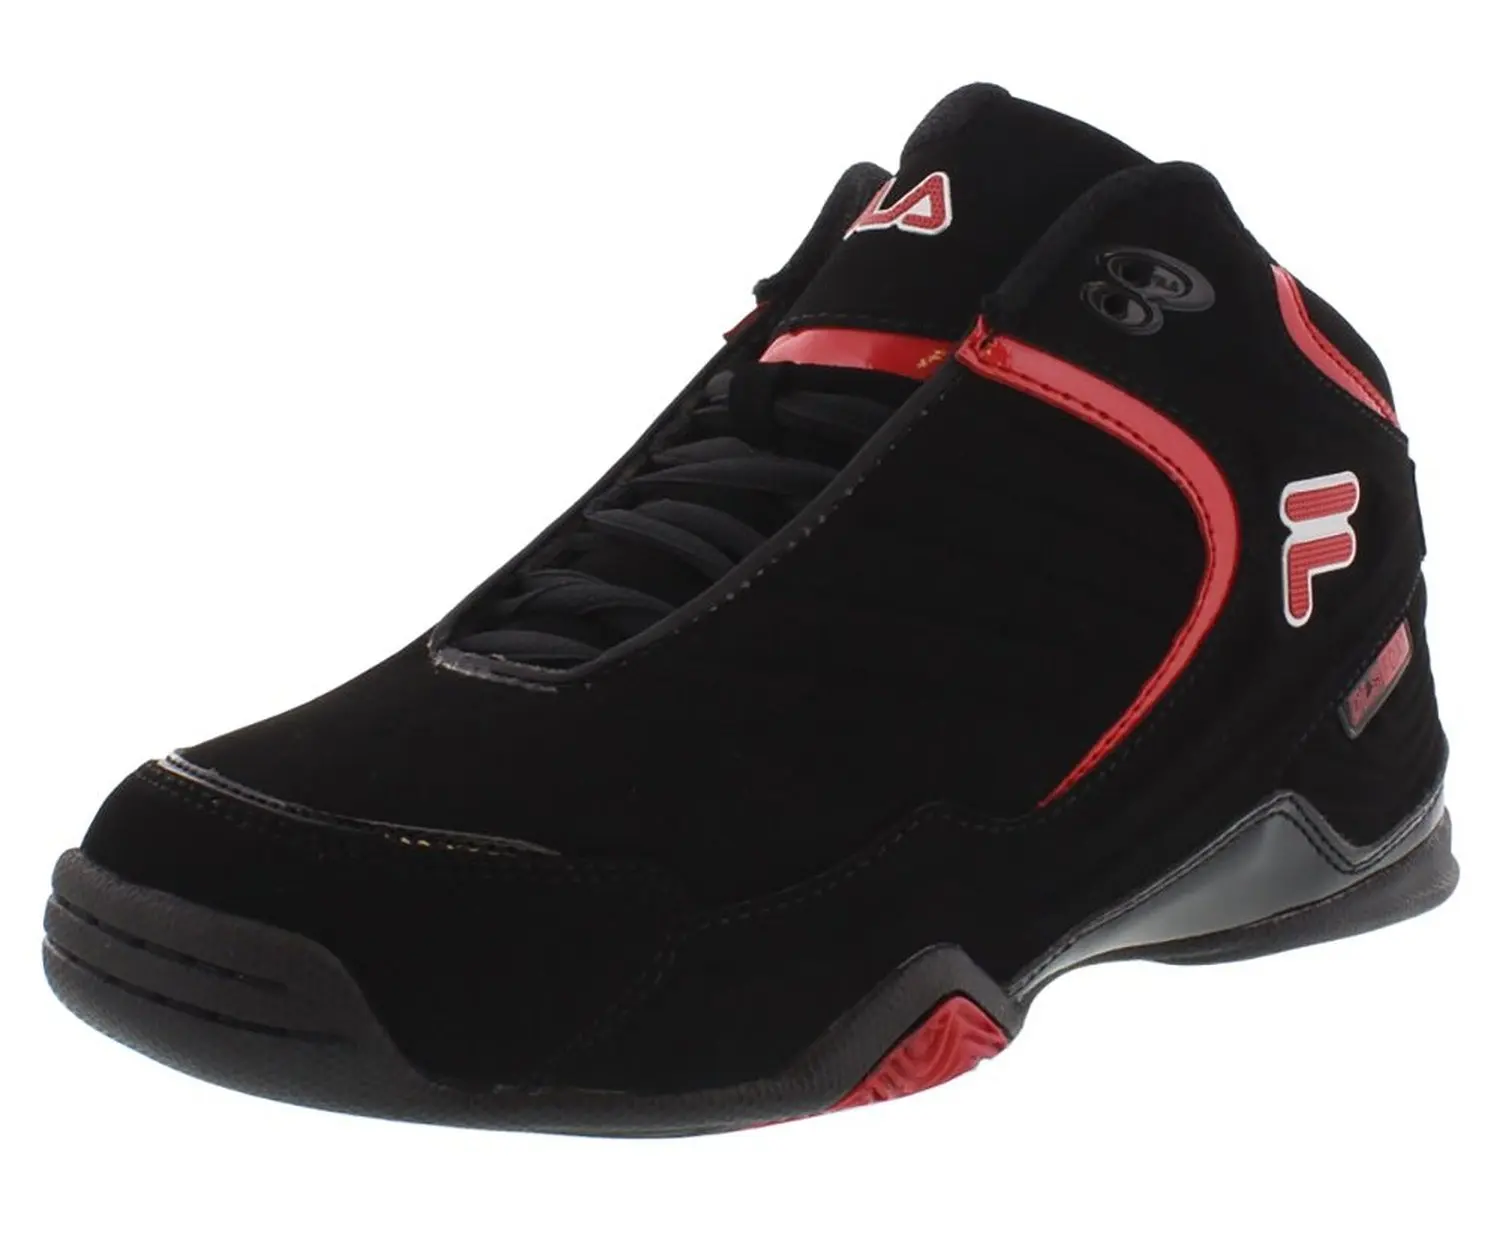 Buy Fila Mens Breakaway 5 Basketball Shoe in Cheap Price on Alibaba.com